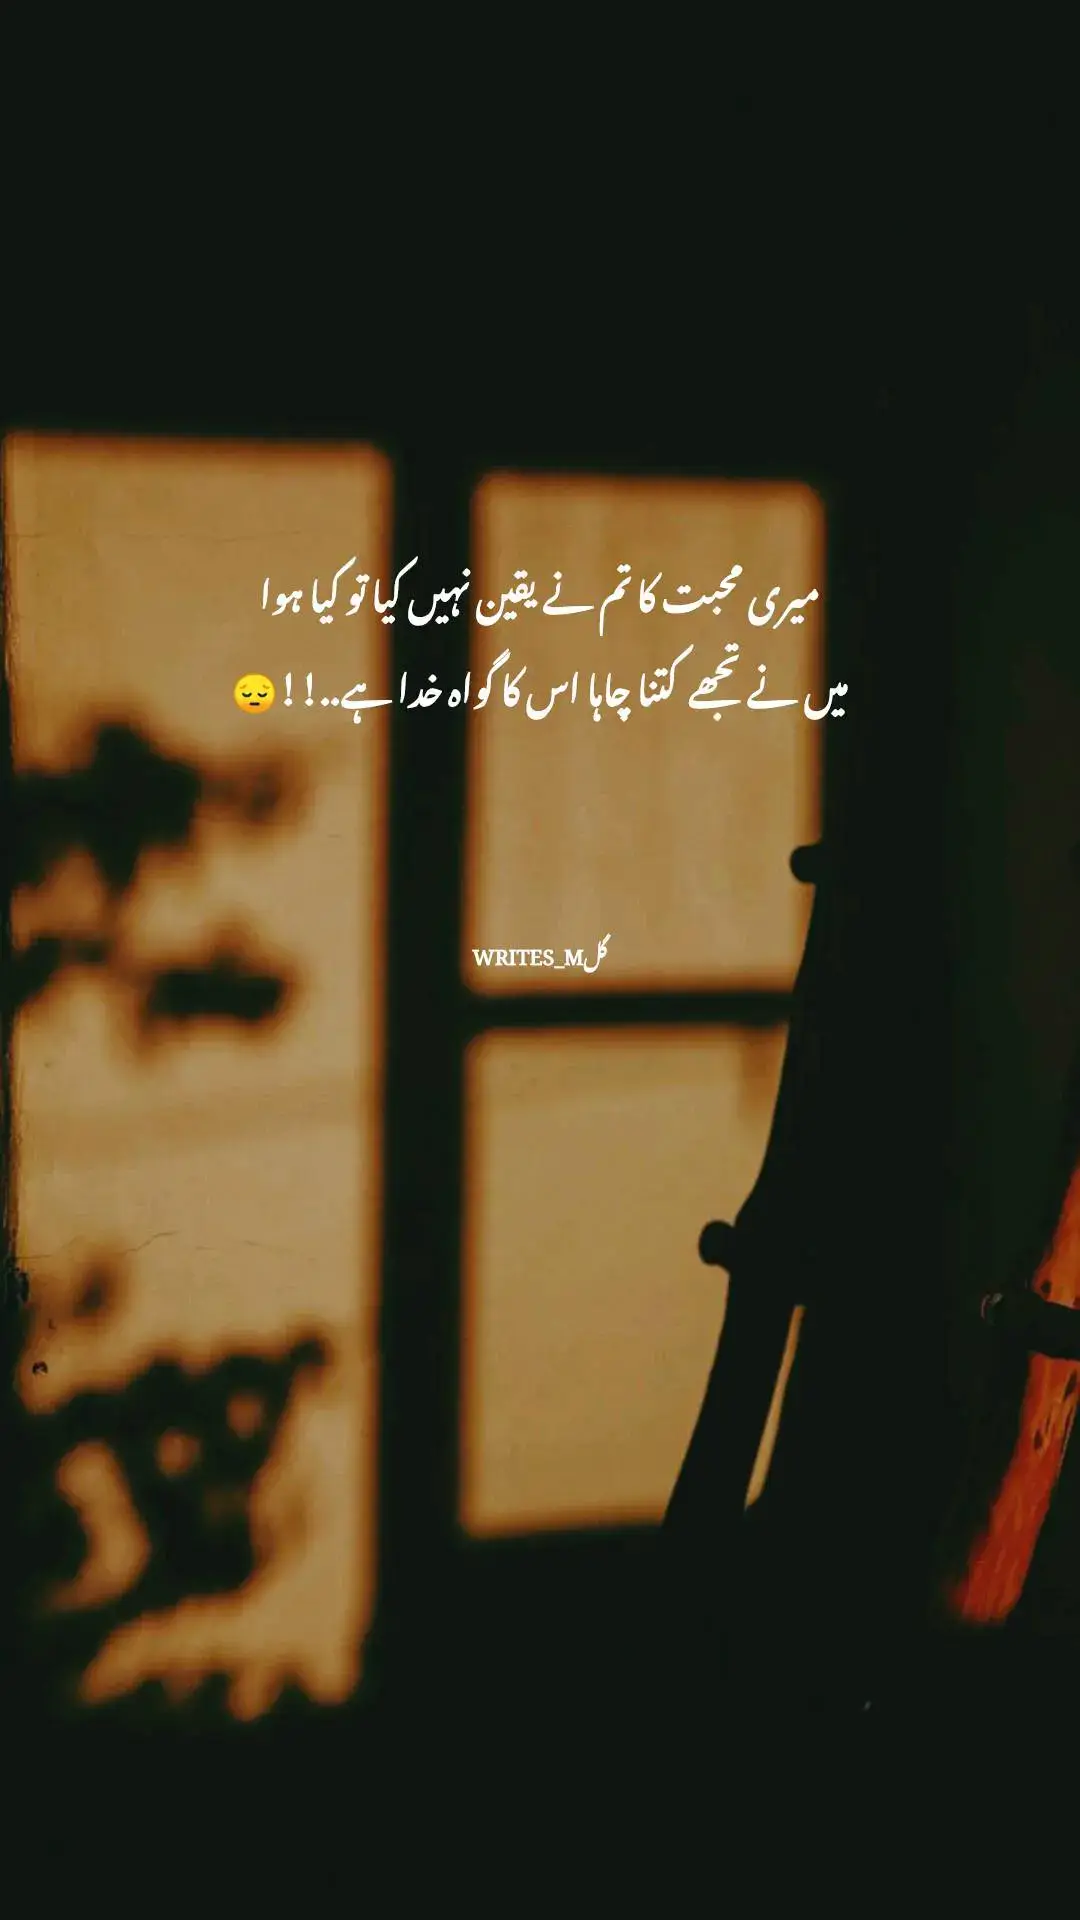 DEEP LINESSS💔#sad poetry #1millionaudition #for_you_page #hellotiktok #tiktokpakistan #poetrylover #poetrystatus #poetrylover #poetrystatus #urdupoetry #deeplines #foryoupage #g_mwrites01 